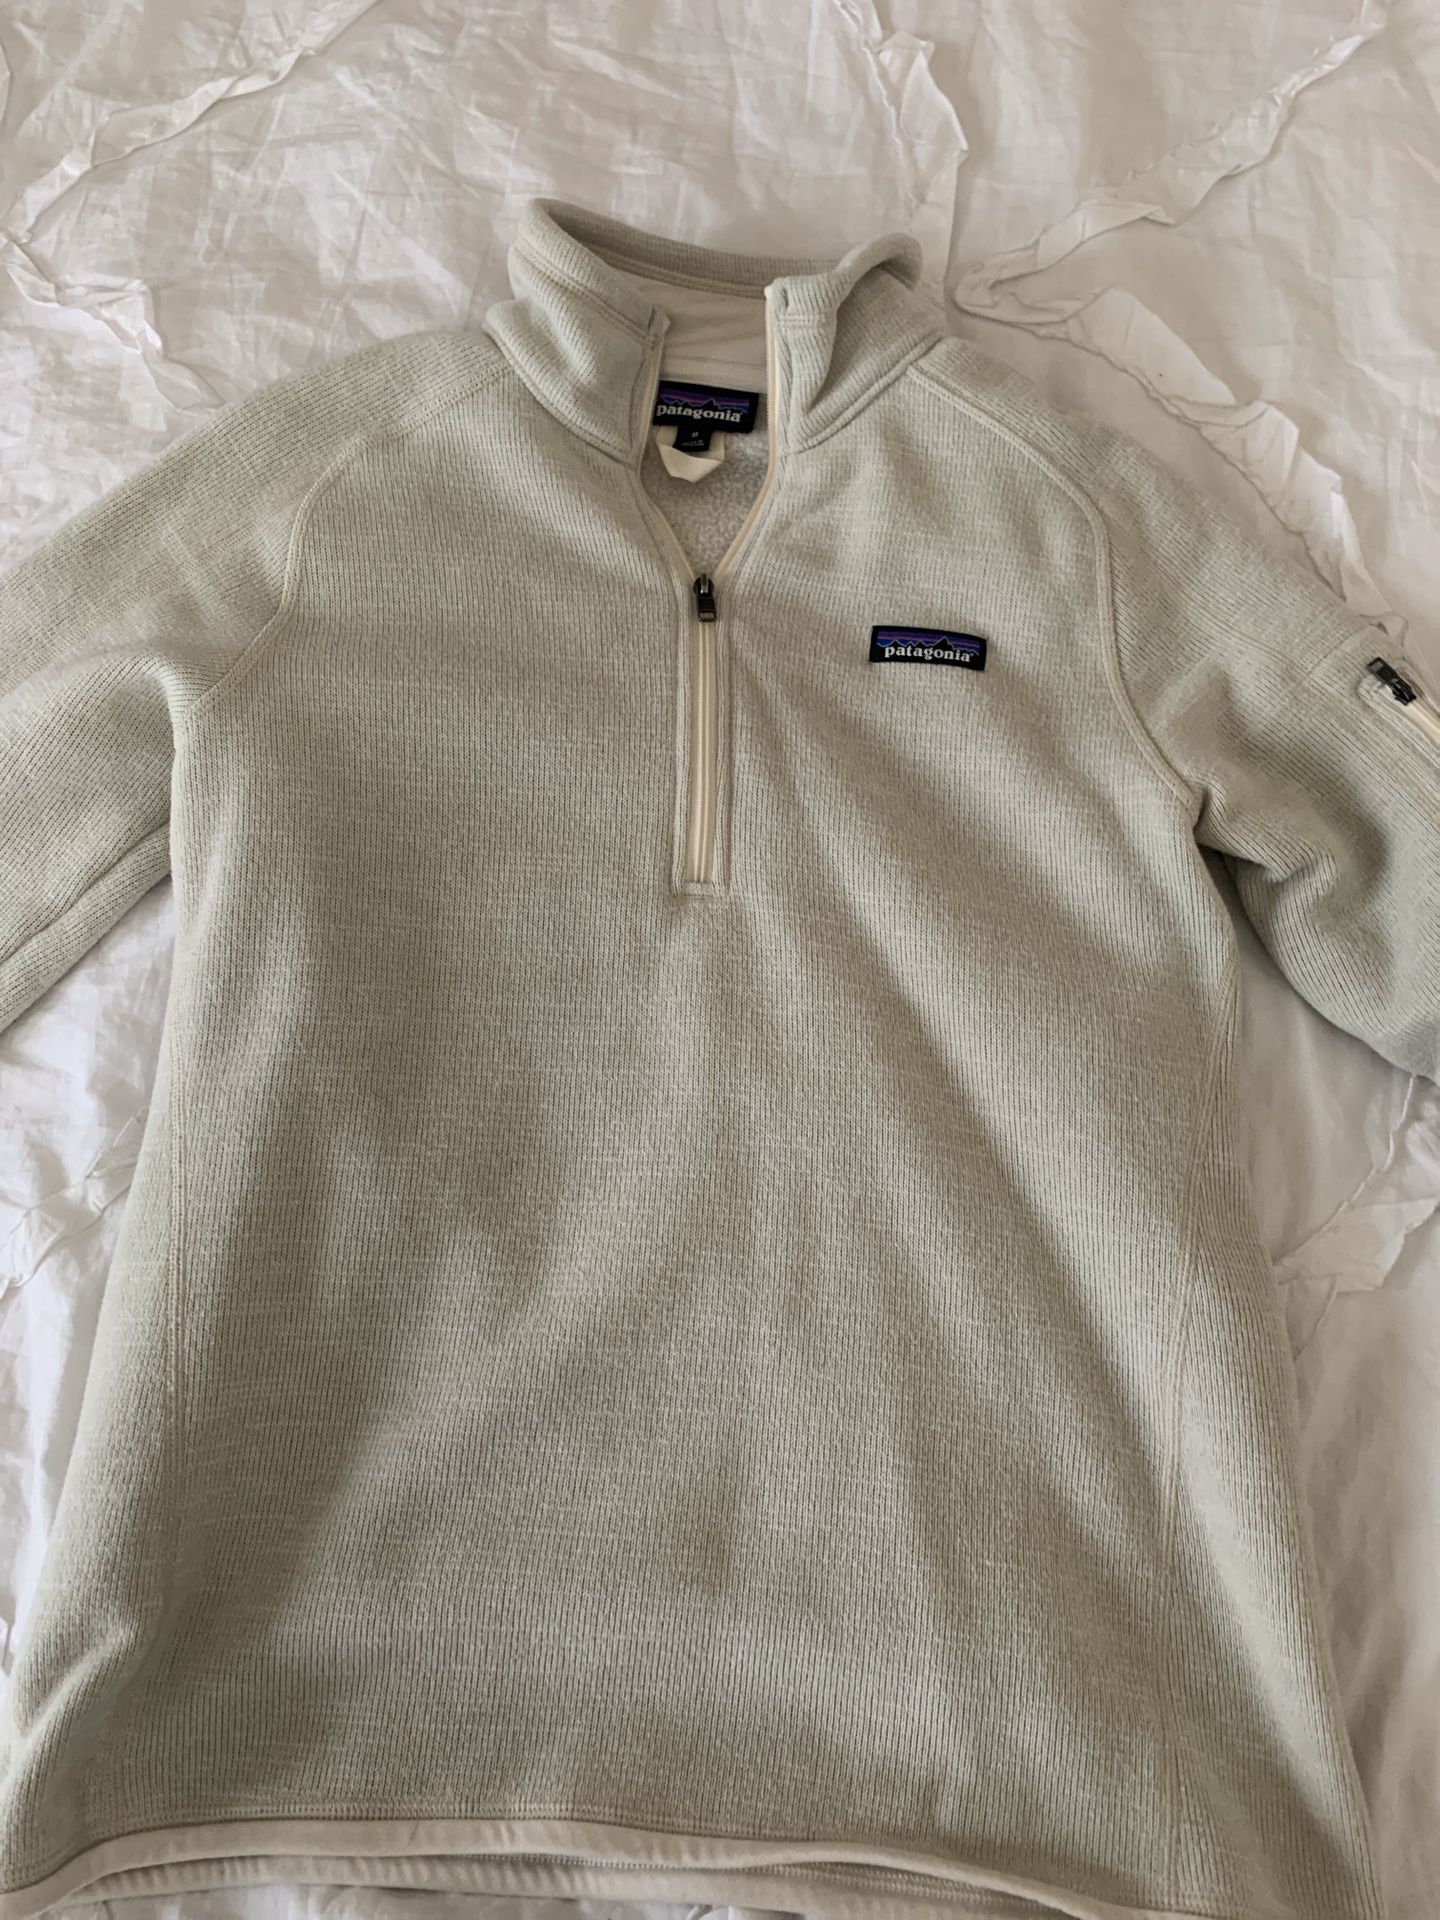 Tan Patagonia sweatshirt/pullover